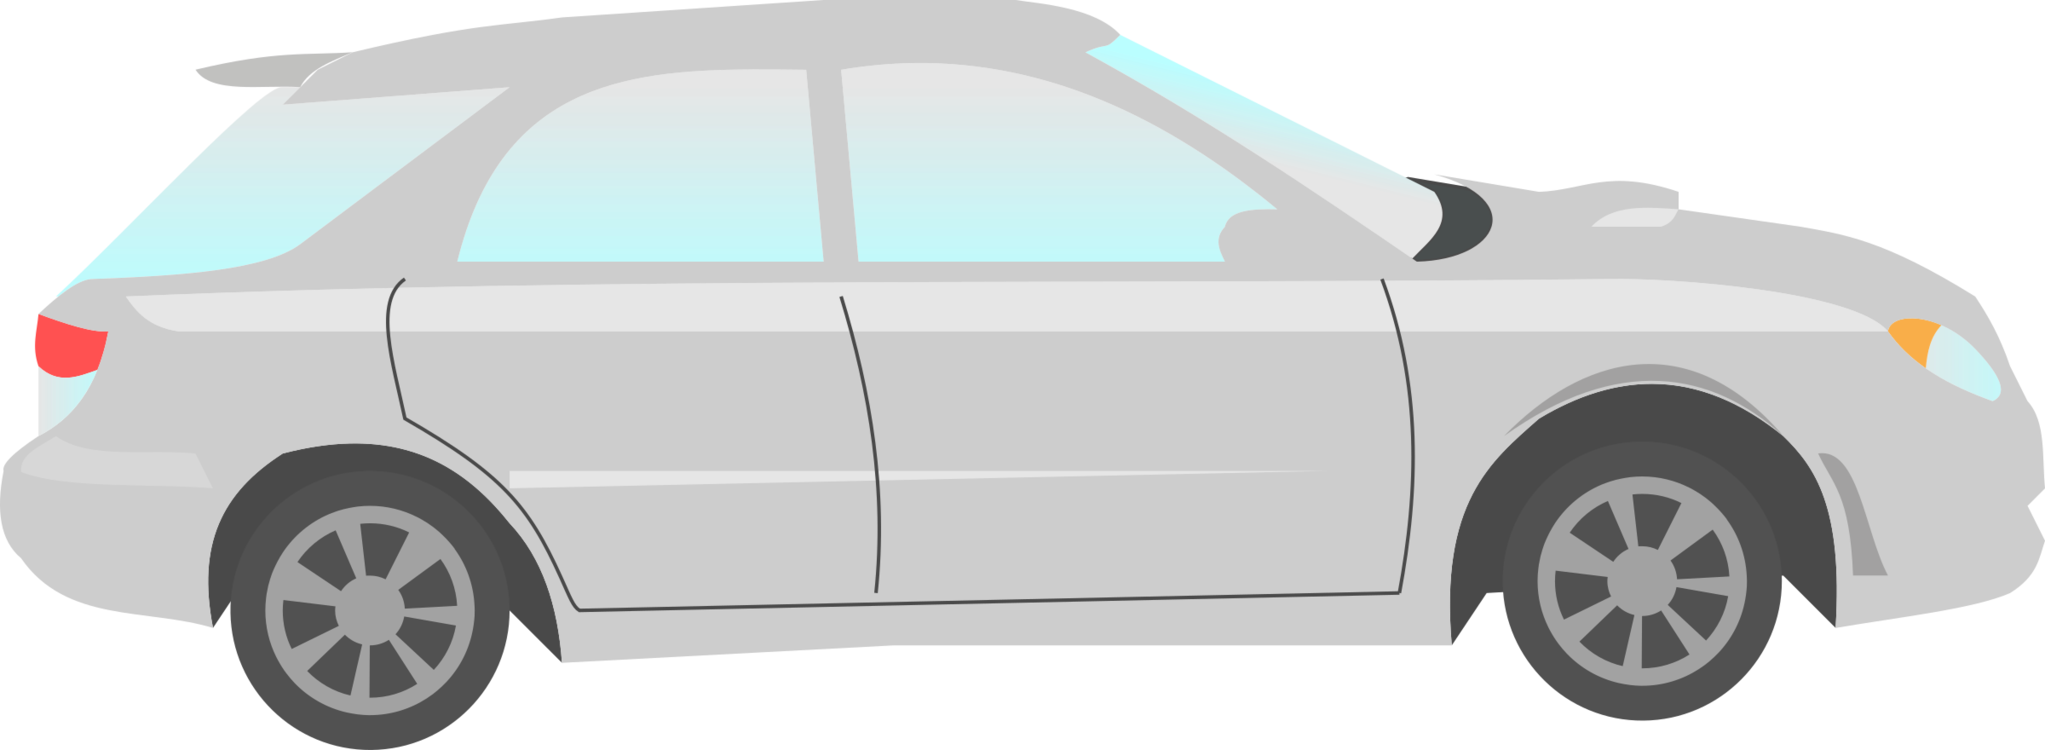 Vehicle Door,Family Car,Material